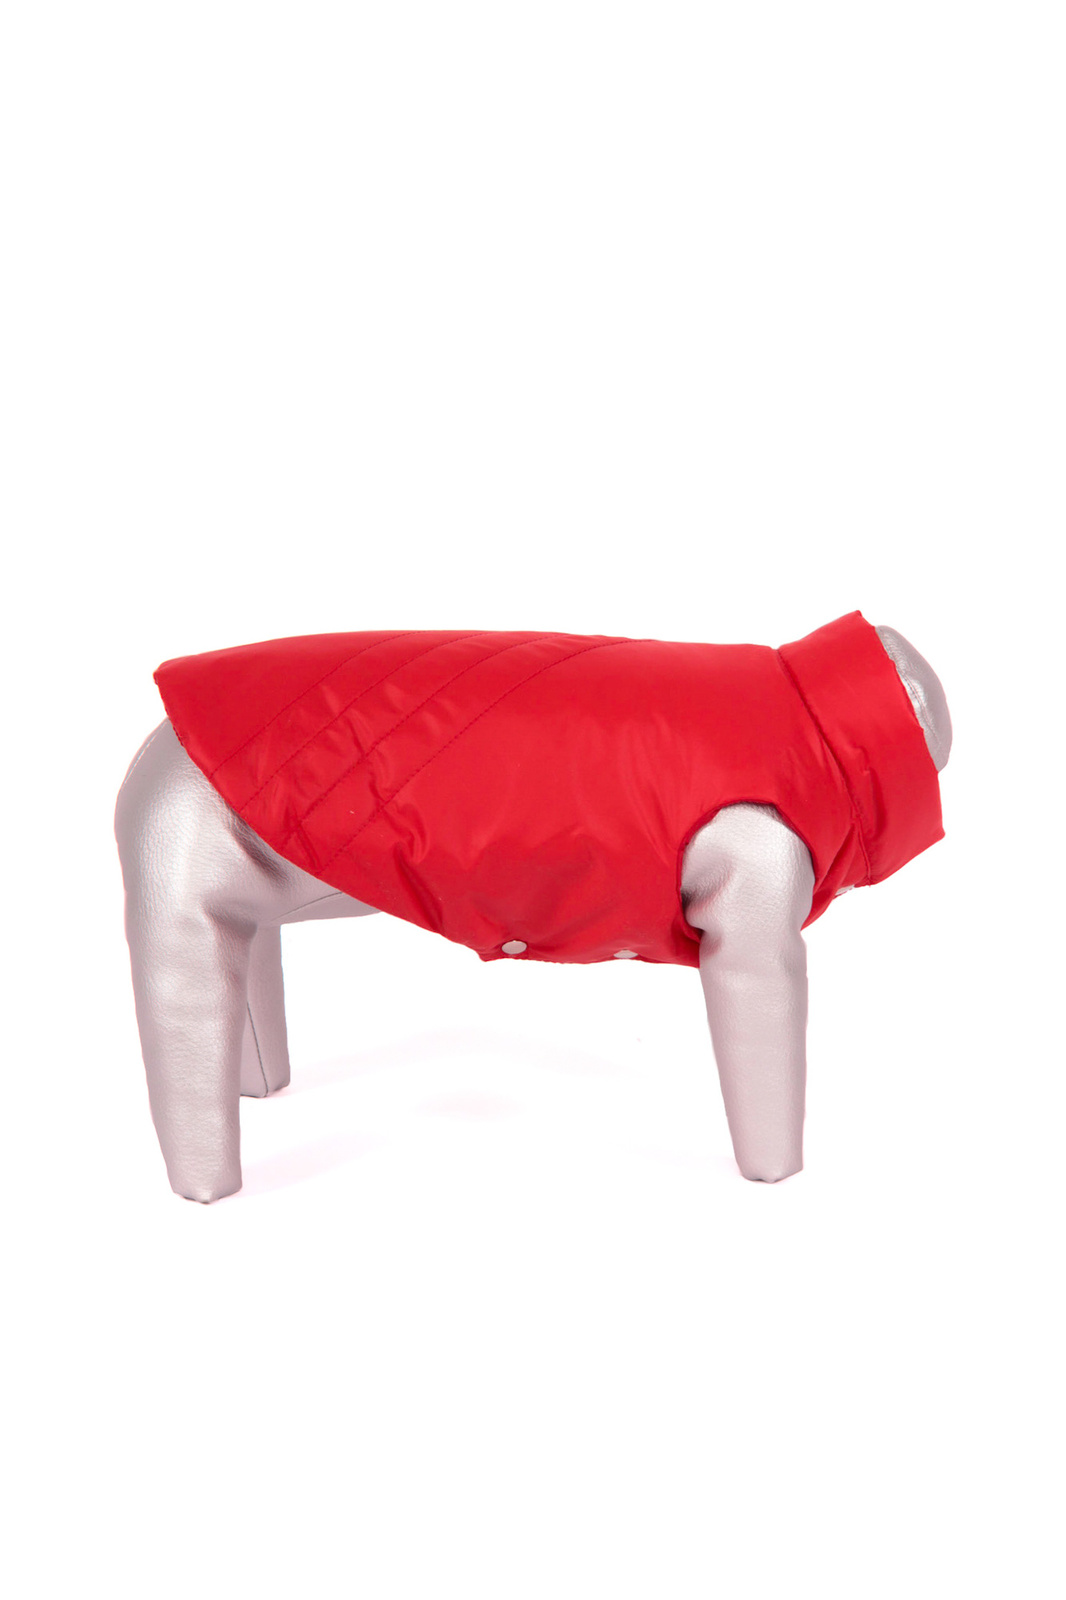 Yoriki Yoriki жилет для собак Страйп, красный, унисекс (XL) пуловер для собак yoriki дед мороз красный унисекс размер s